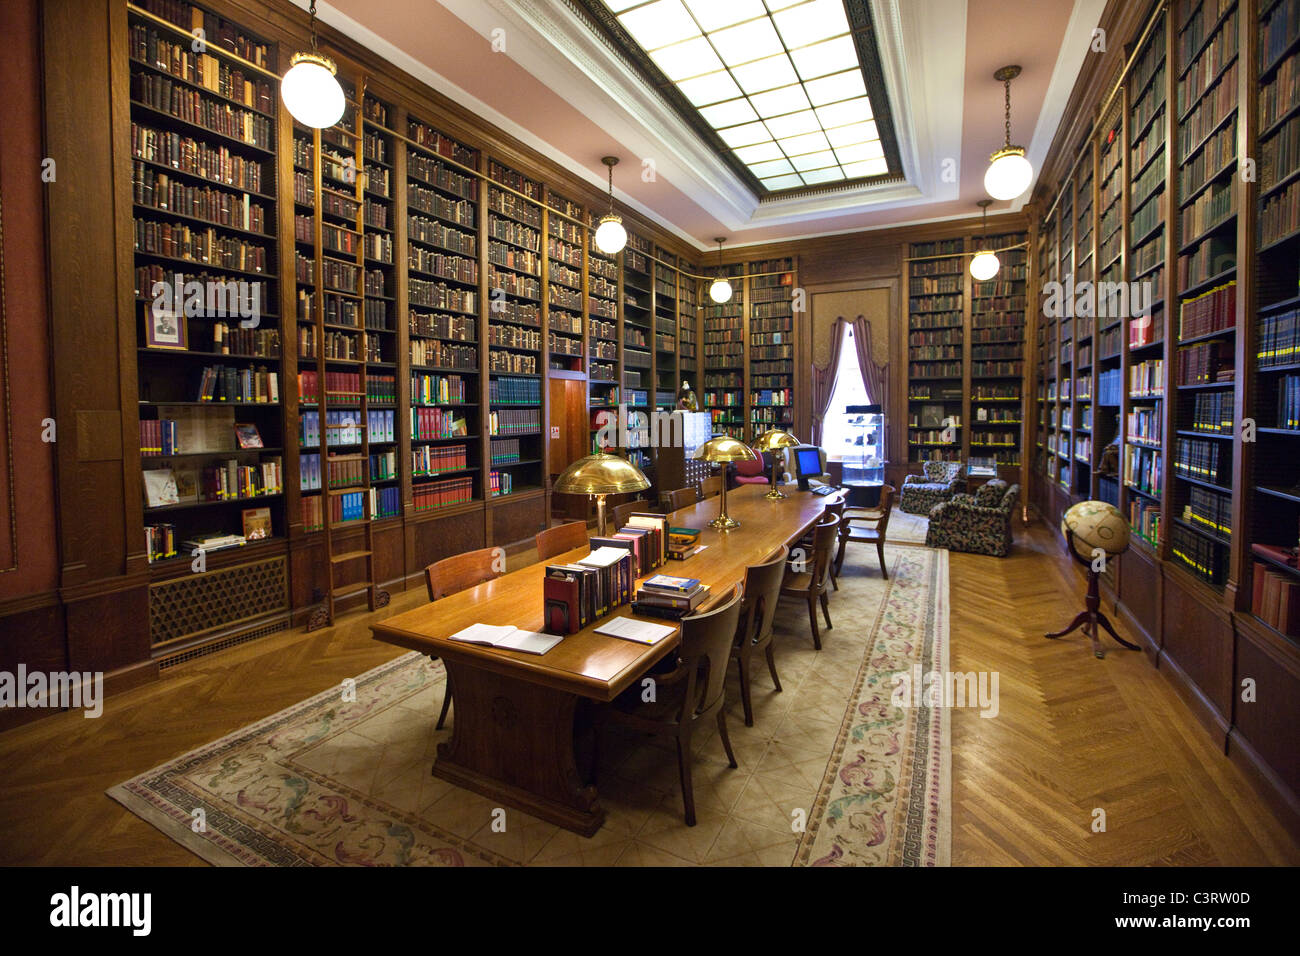 Library inside the Scottish Rite of Freemasonry building in Washington ...